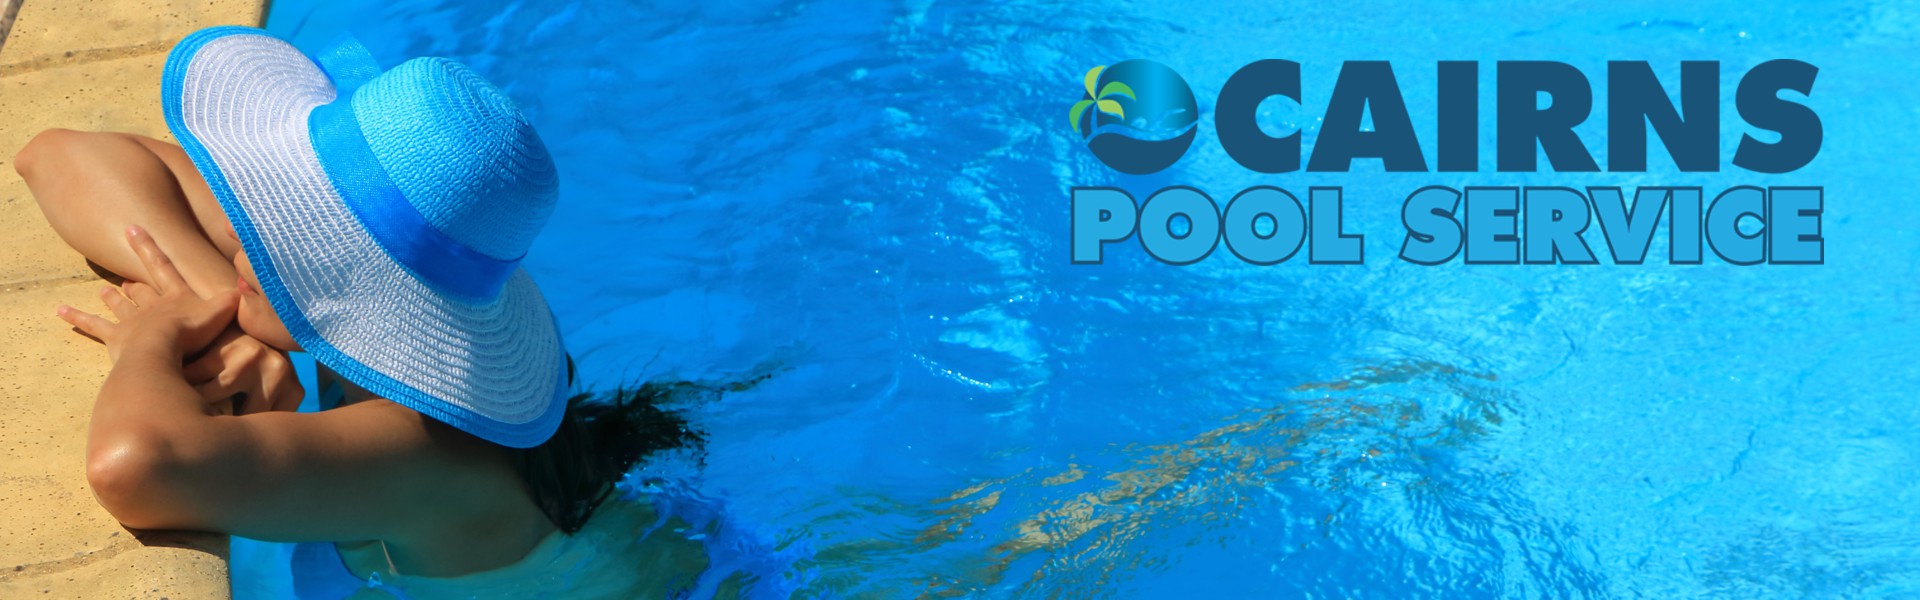 Pool Pumps Cairns